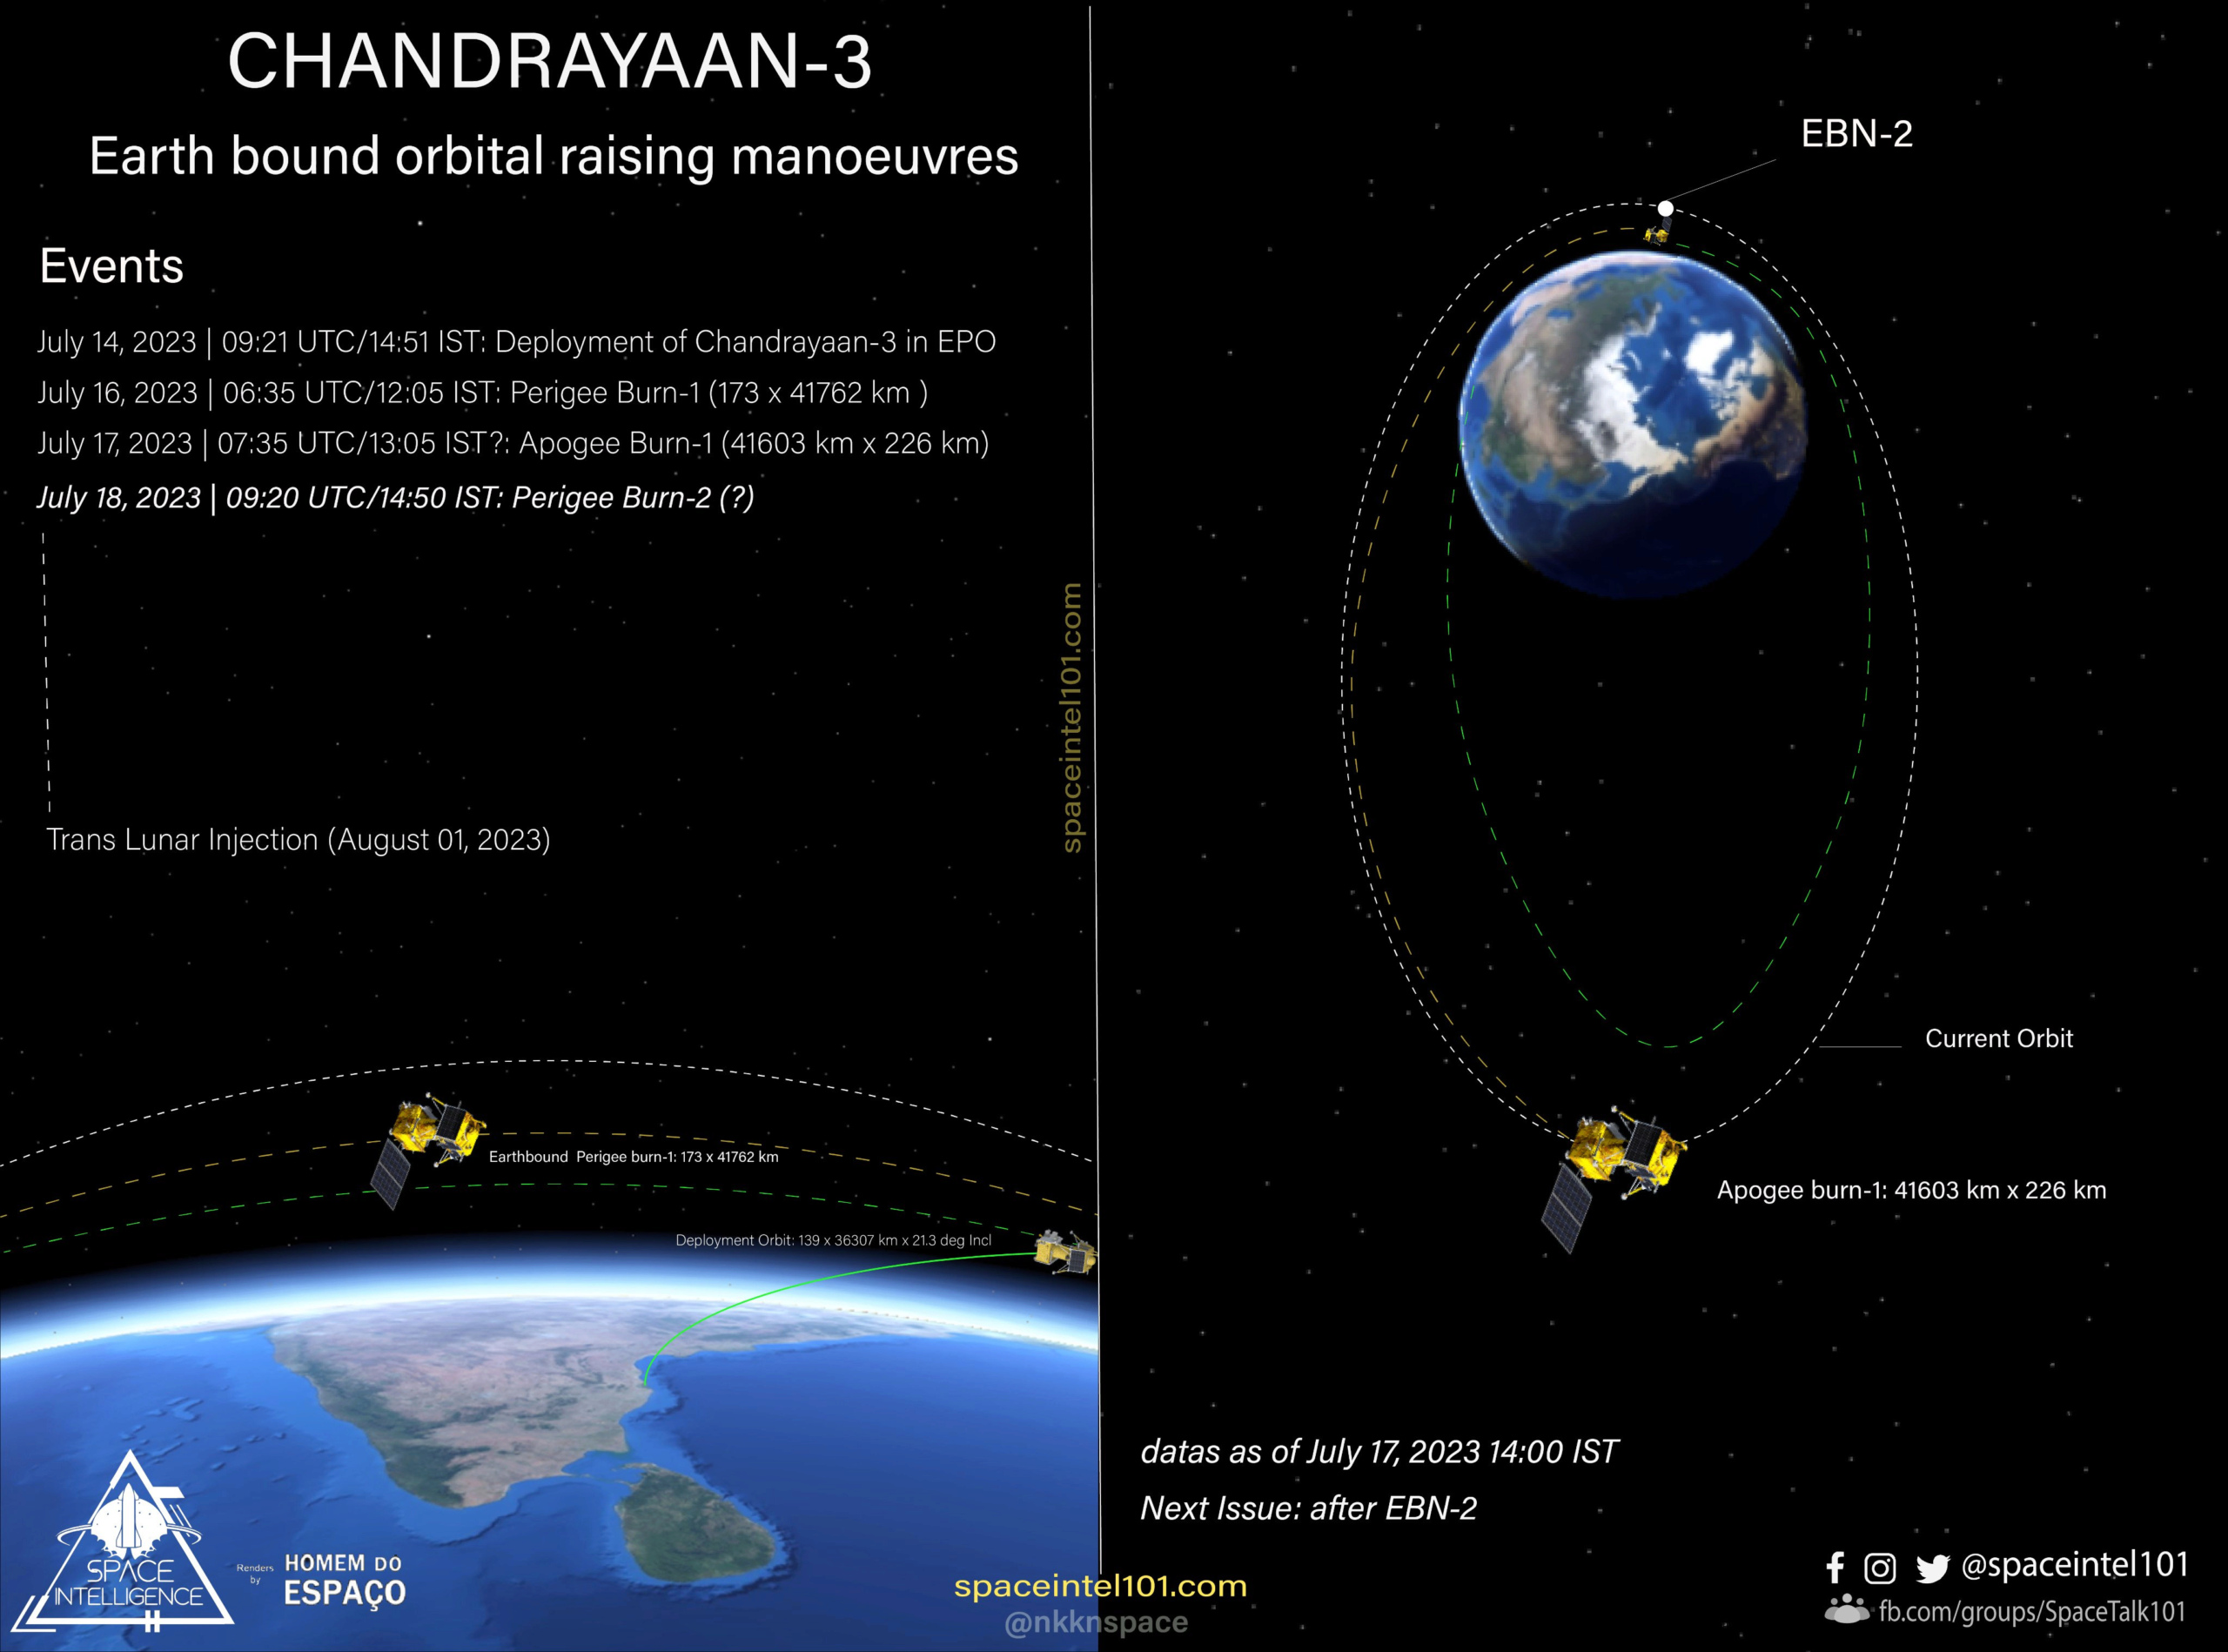 [Chandrayaan 3] Mission sur la Lune (atterrisseur Vikram - rover Pragyan) Image677